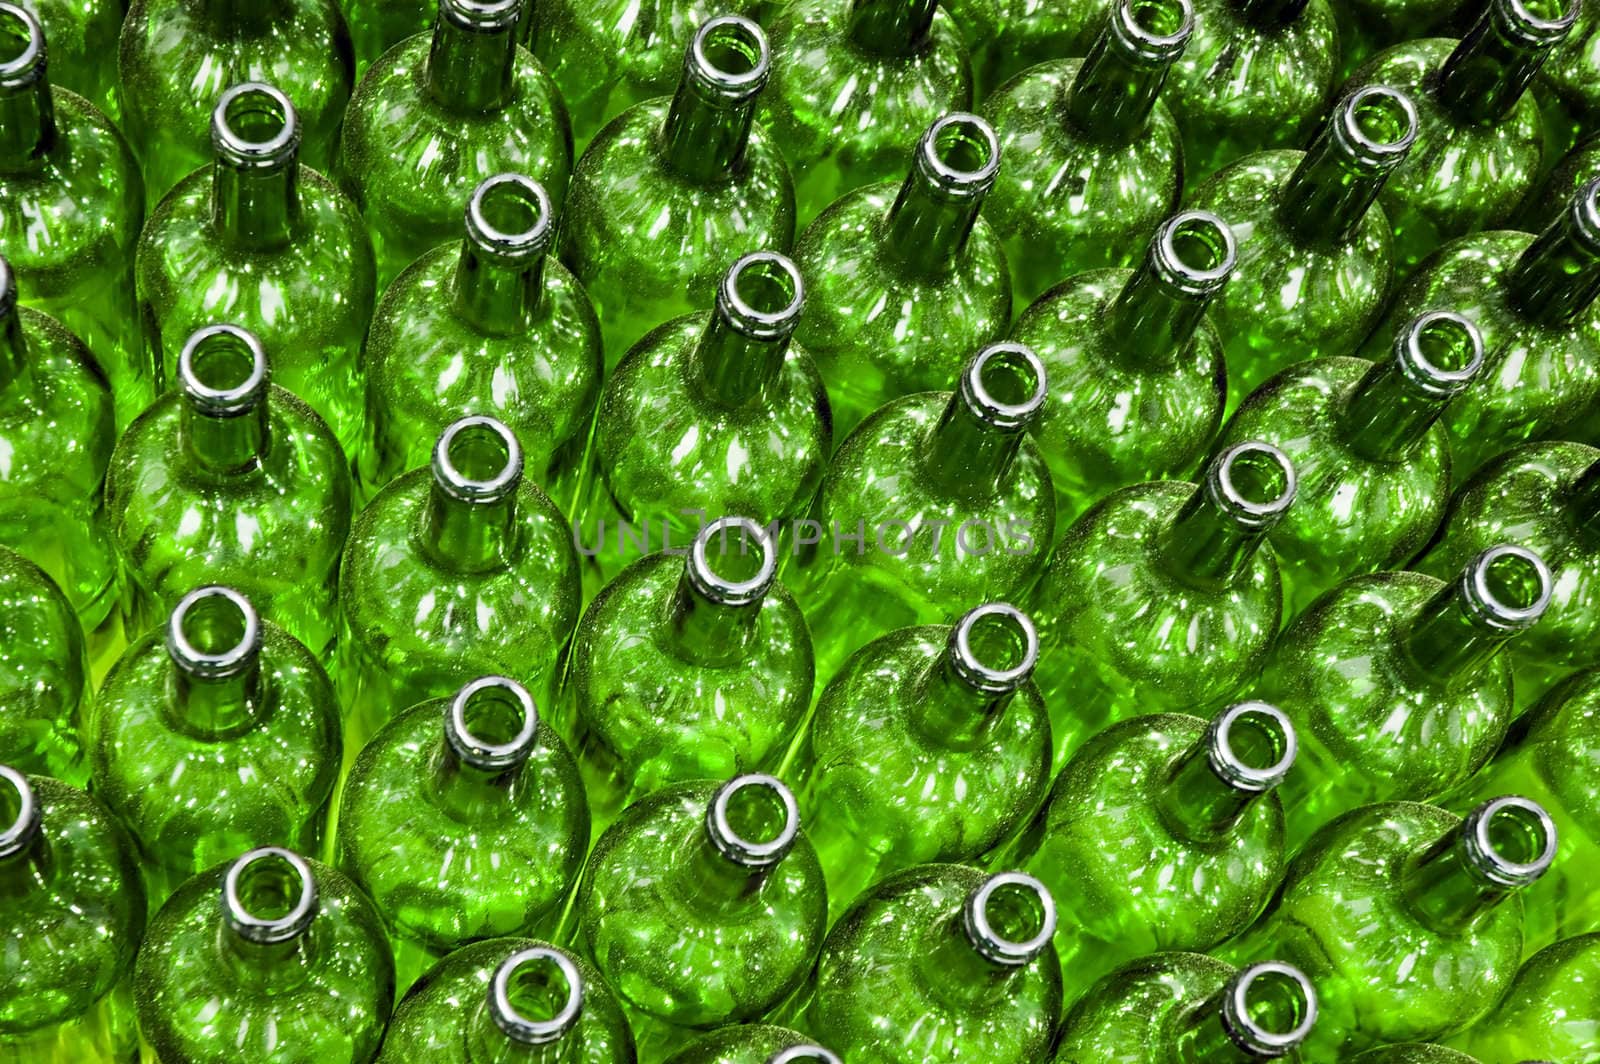 Green glass bottles by mrfotos